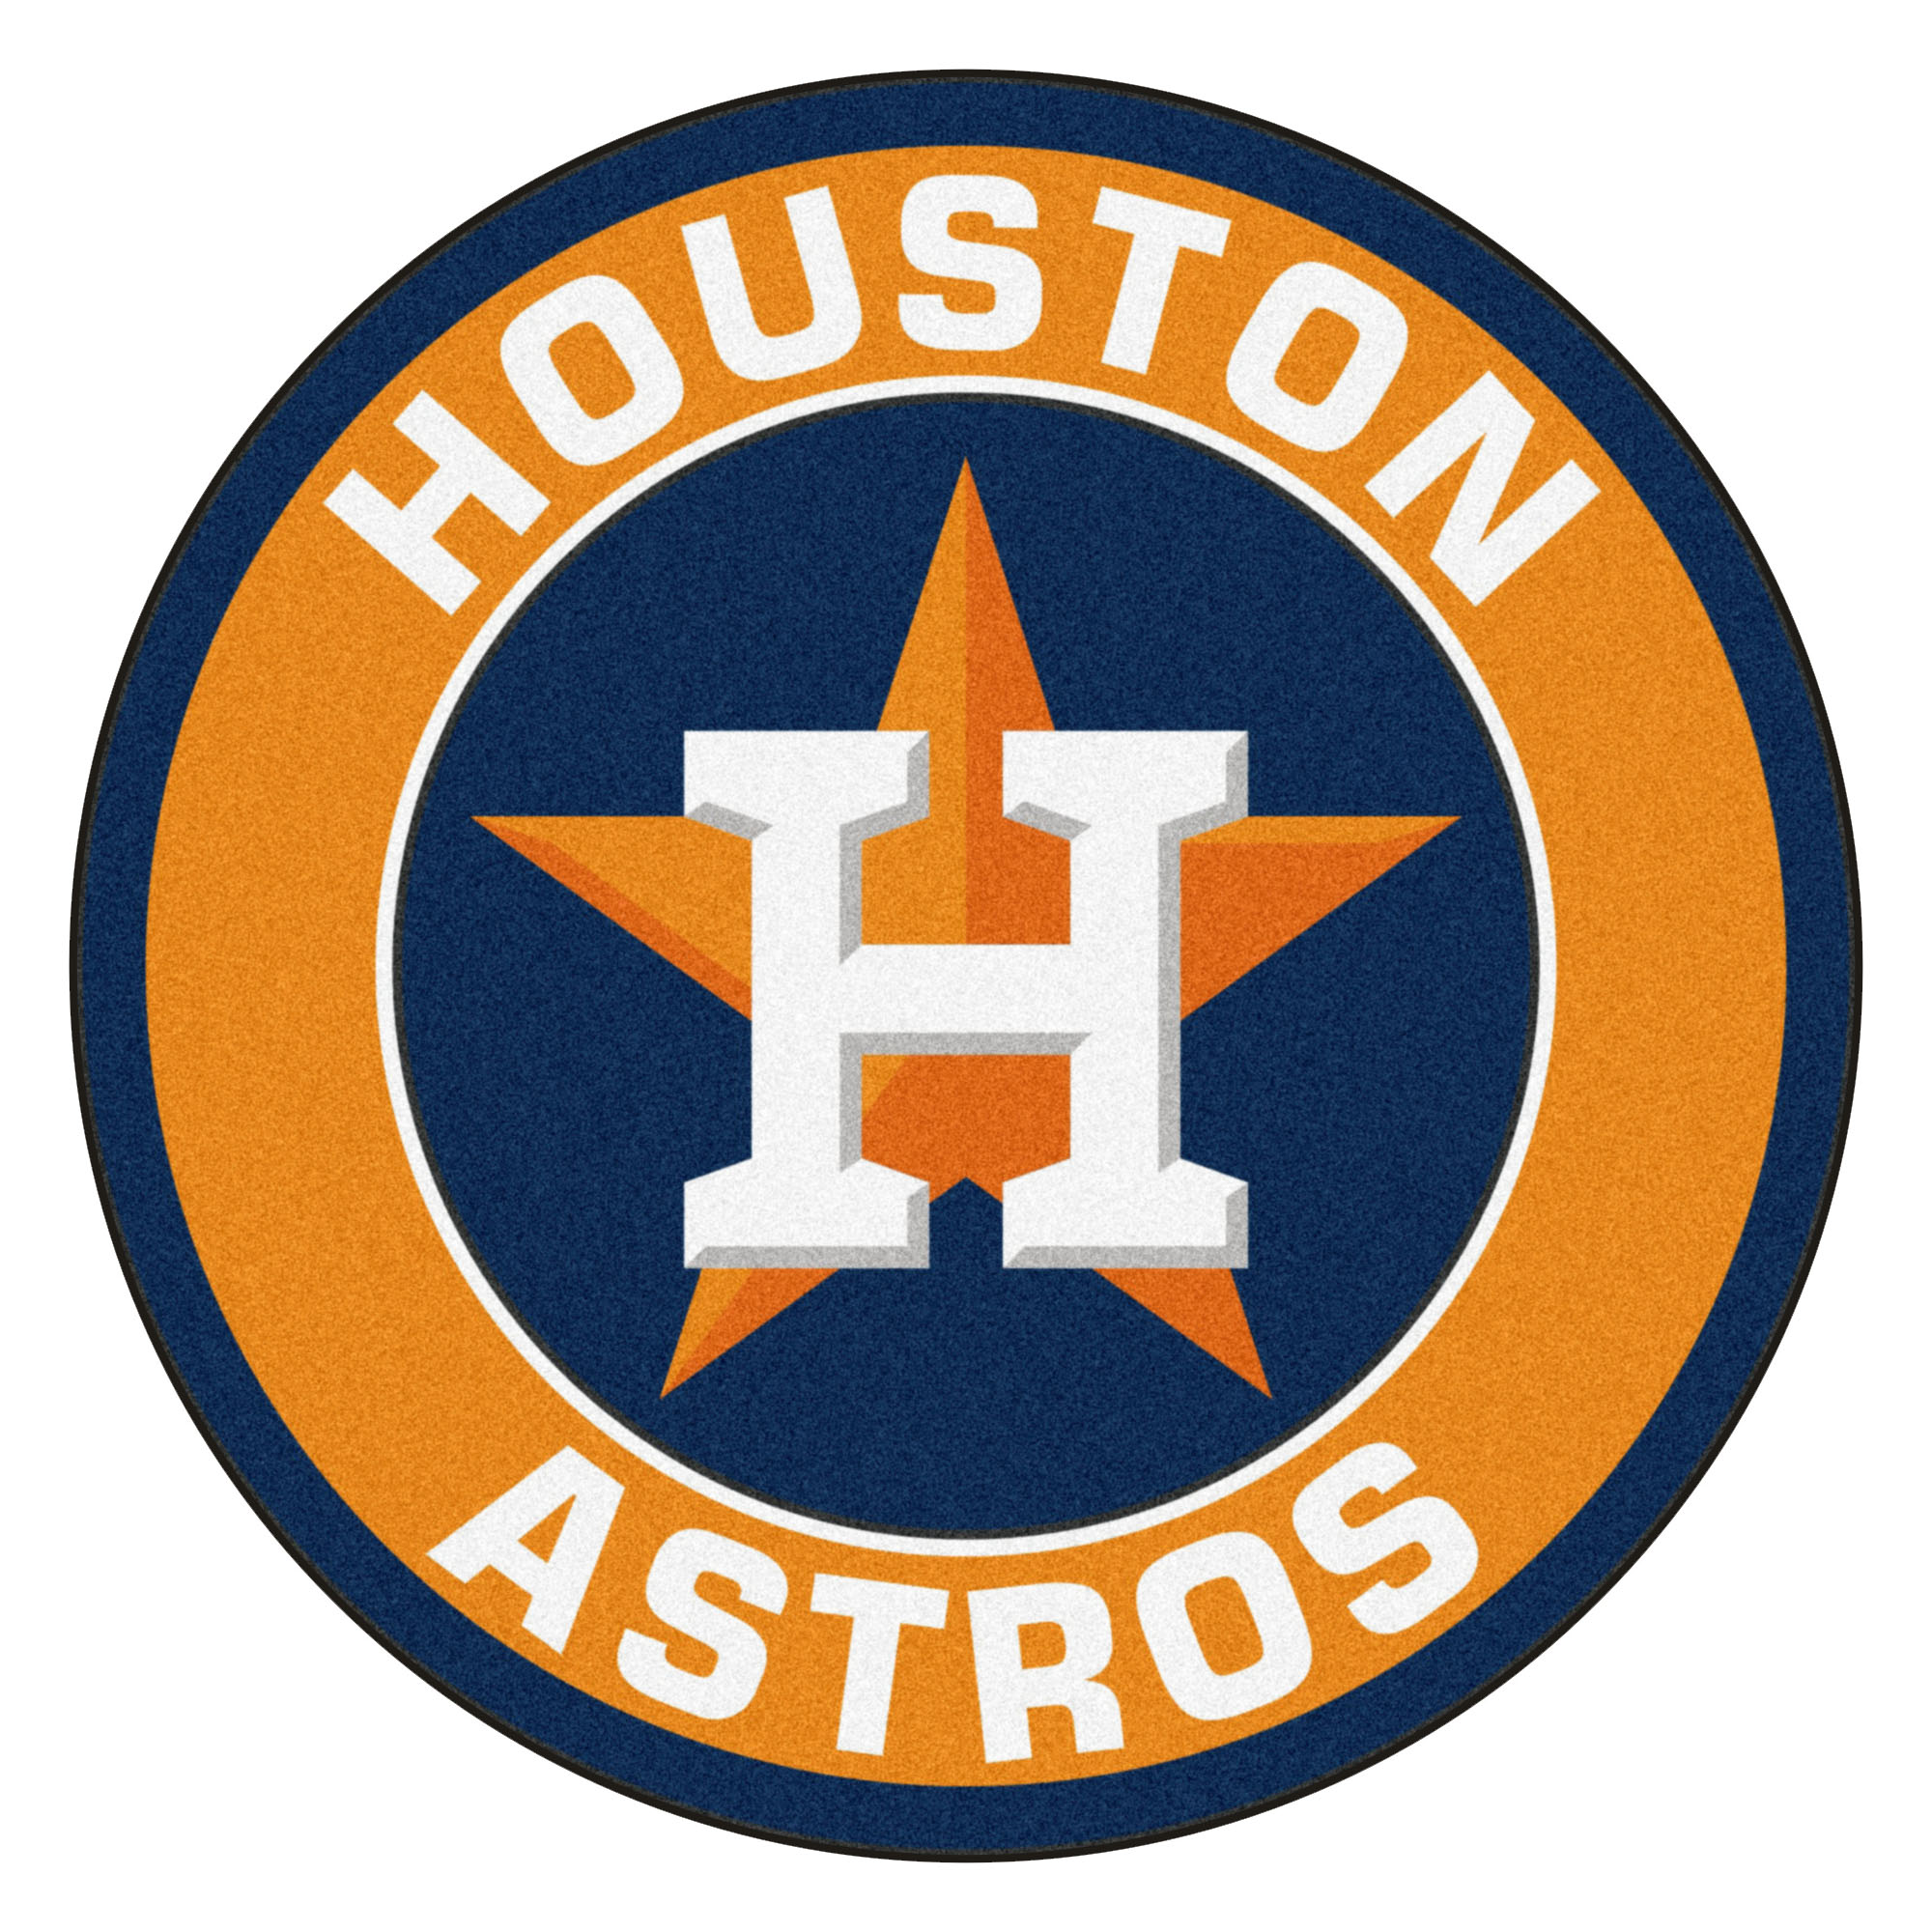 Houston Astros Tickets